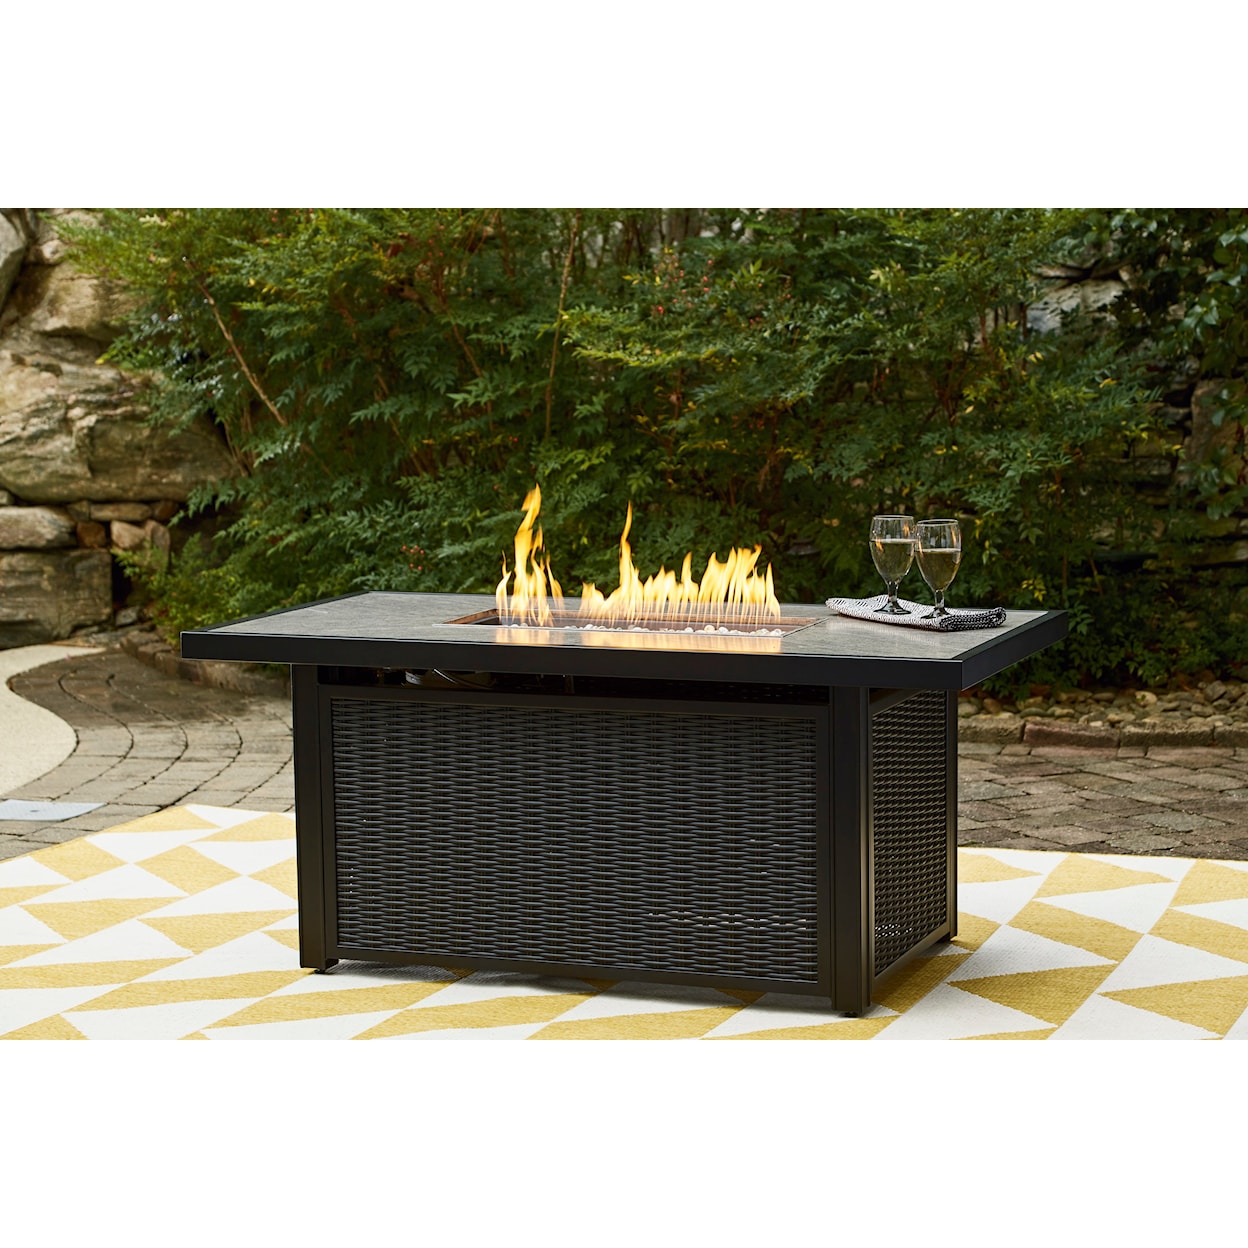 Ashley Furniture Signature Design Beachcroft Outdoor Fire Pit Set